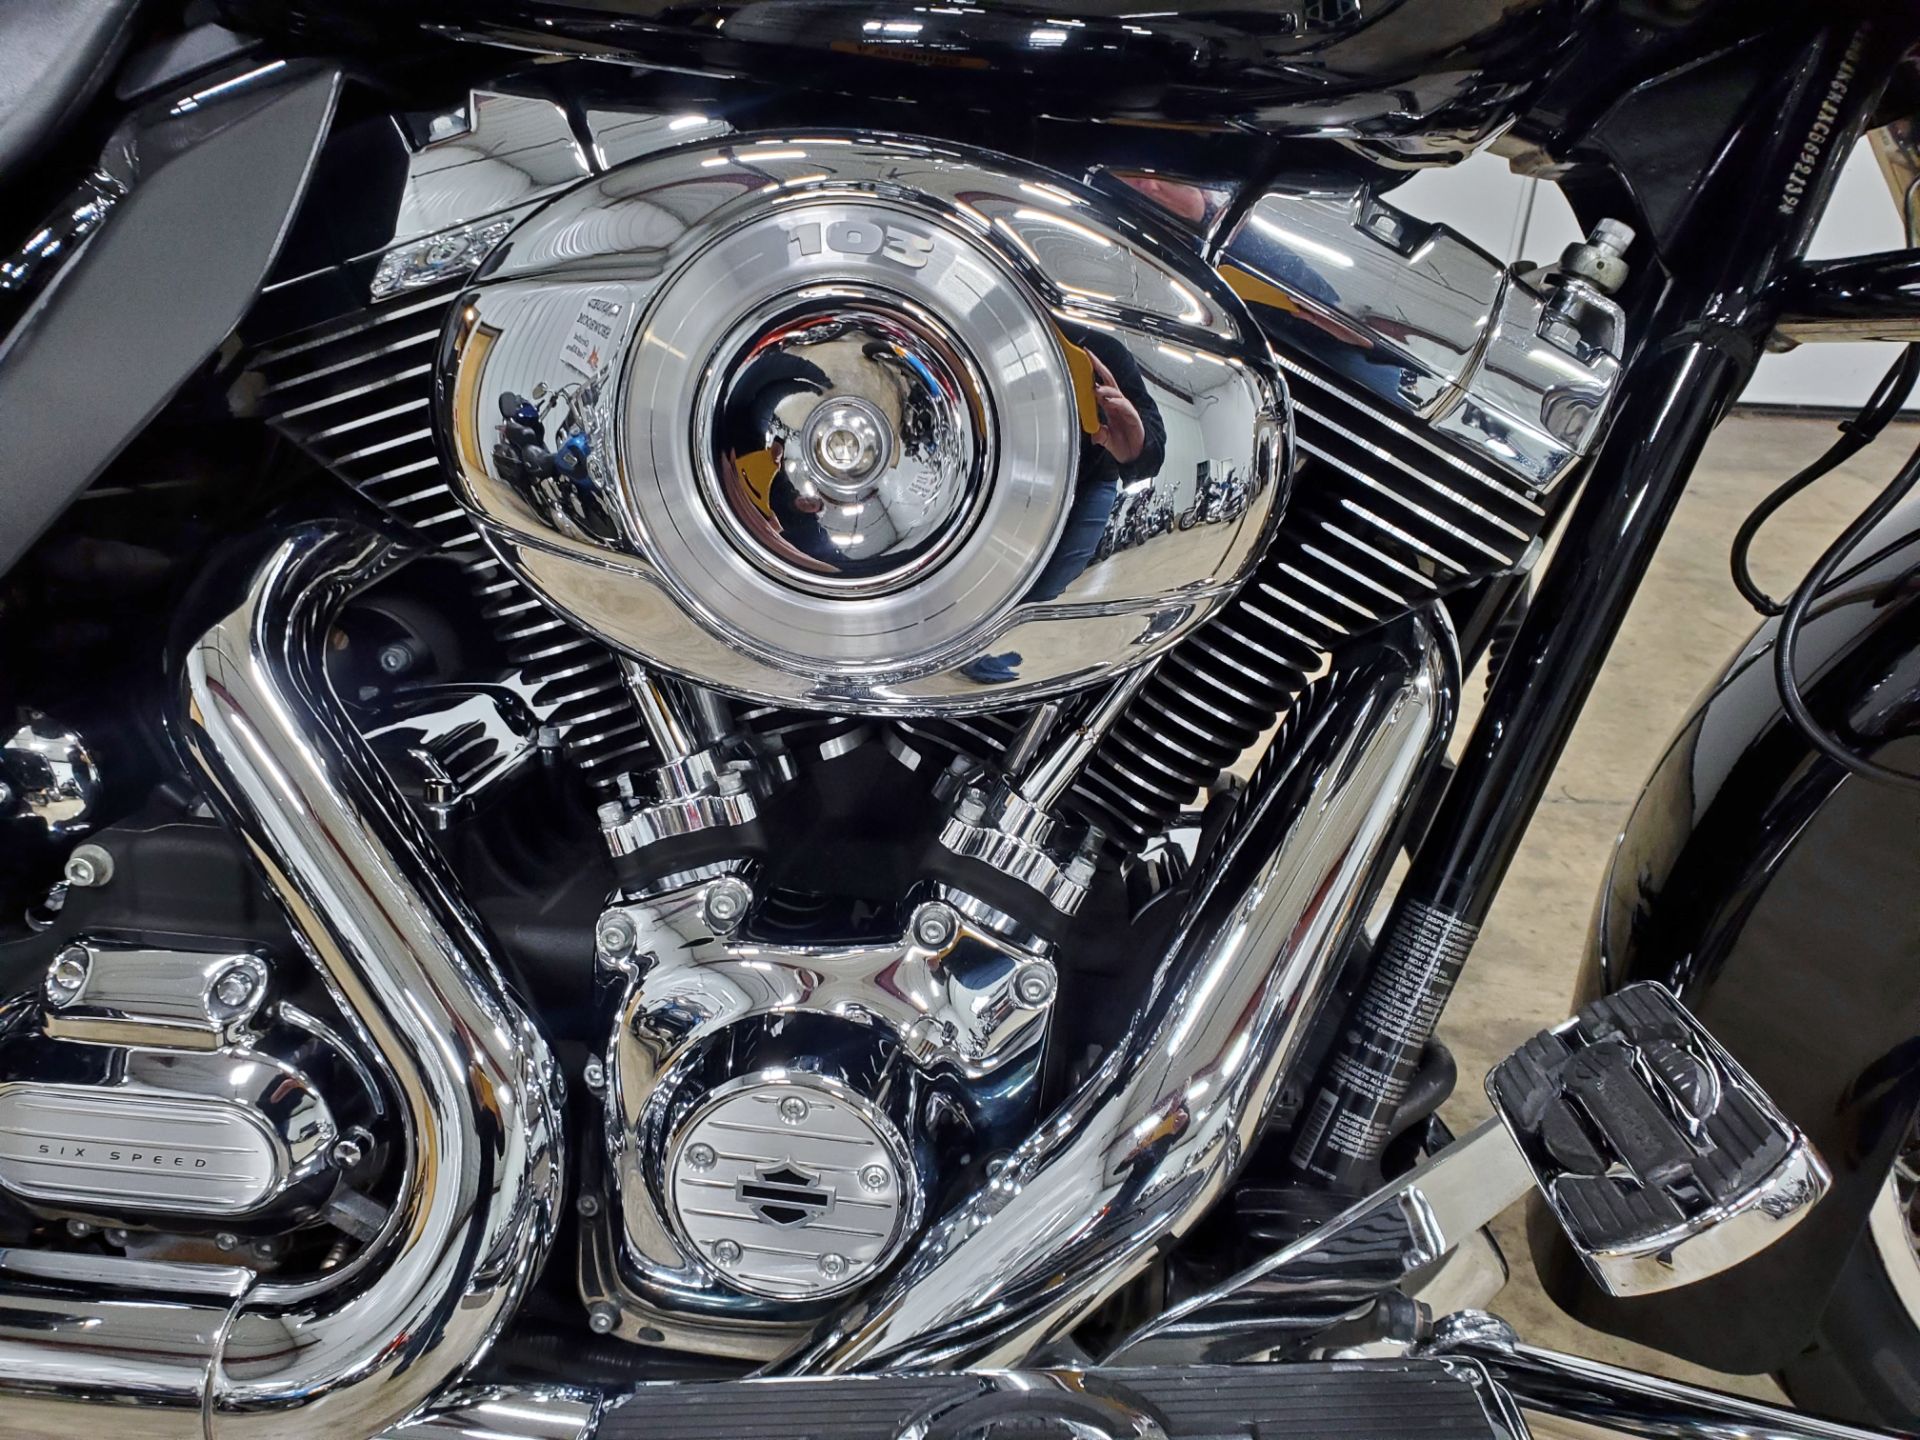 2012 Harley-Davidson Road Glide® Ultra in Sandusky, Ohio - Photo 2